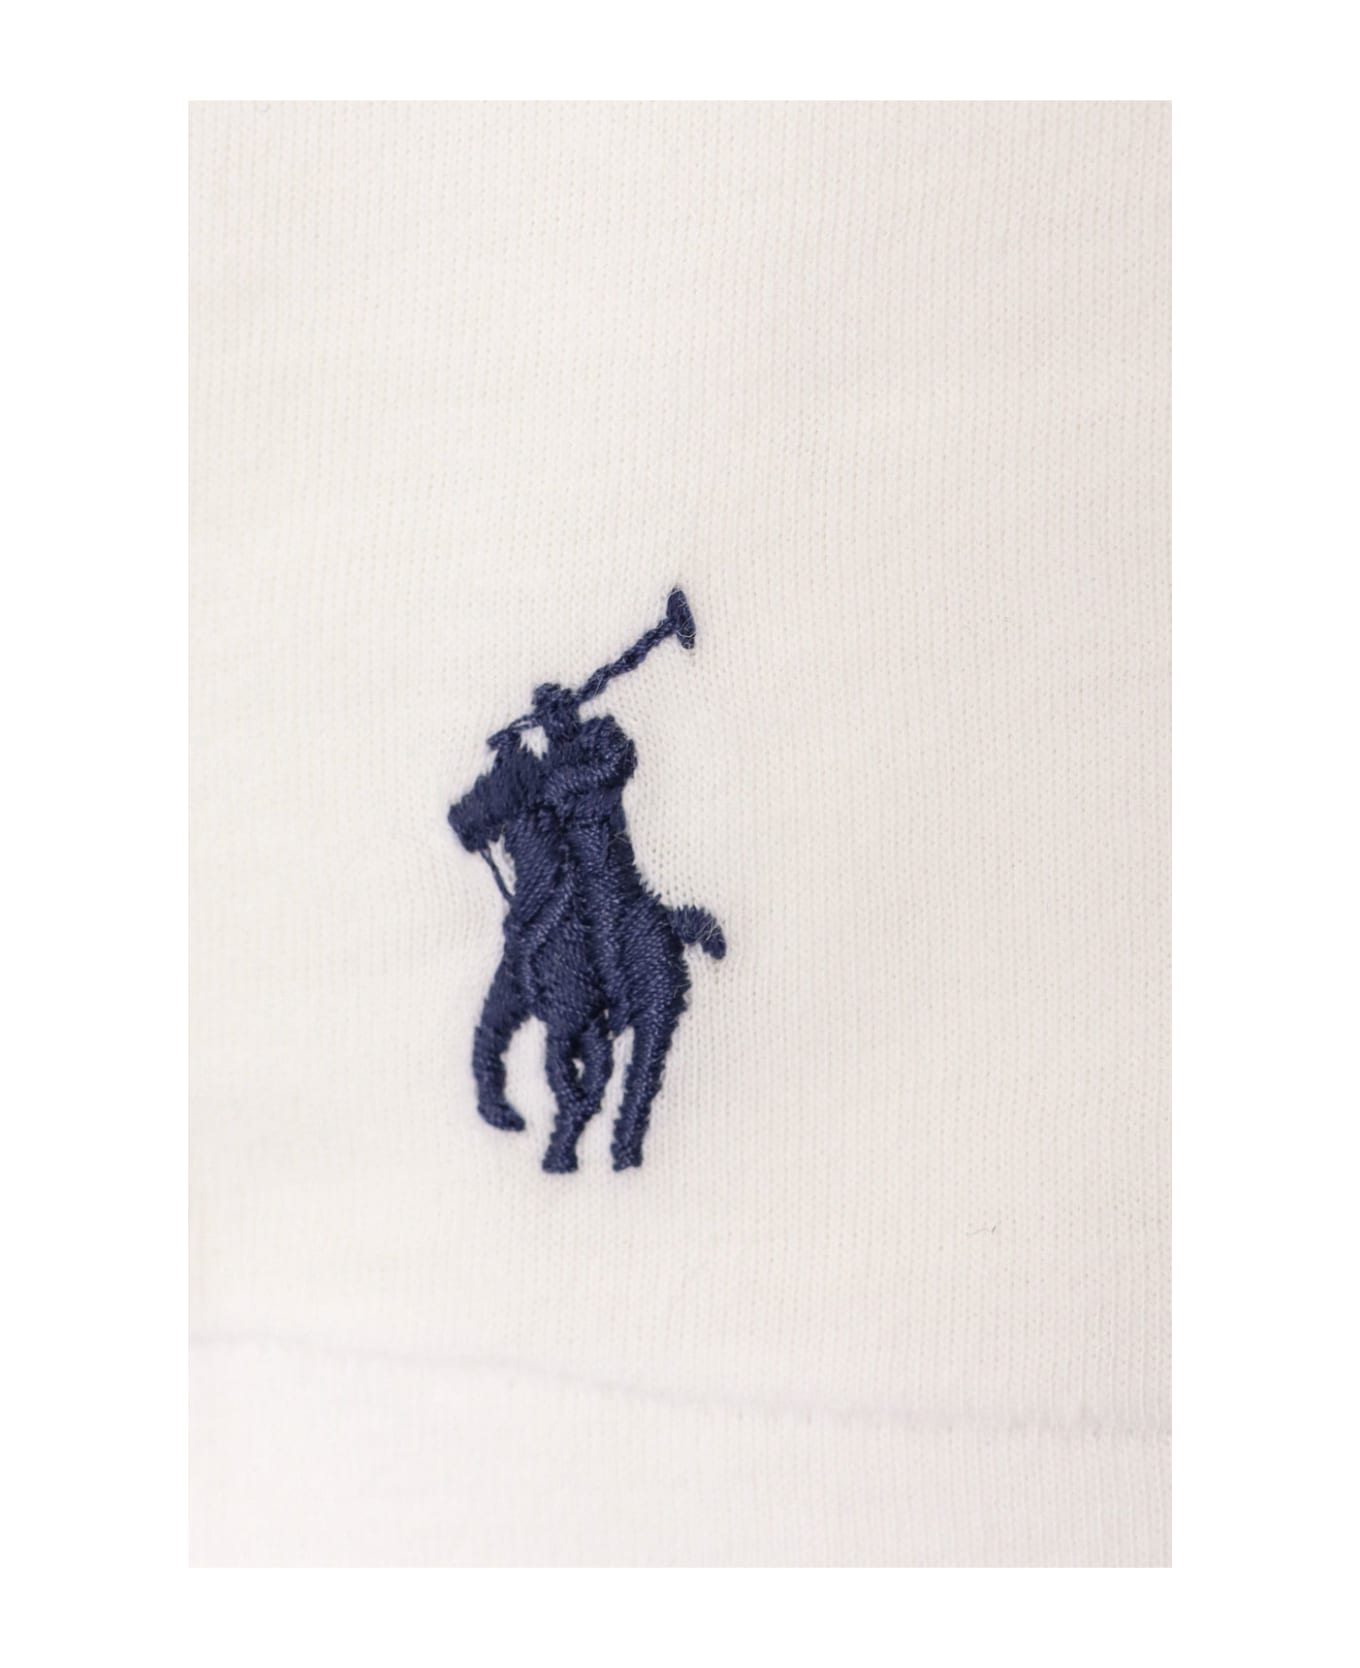 Polo Ralph Lauren T-shirt - White